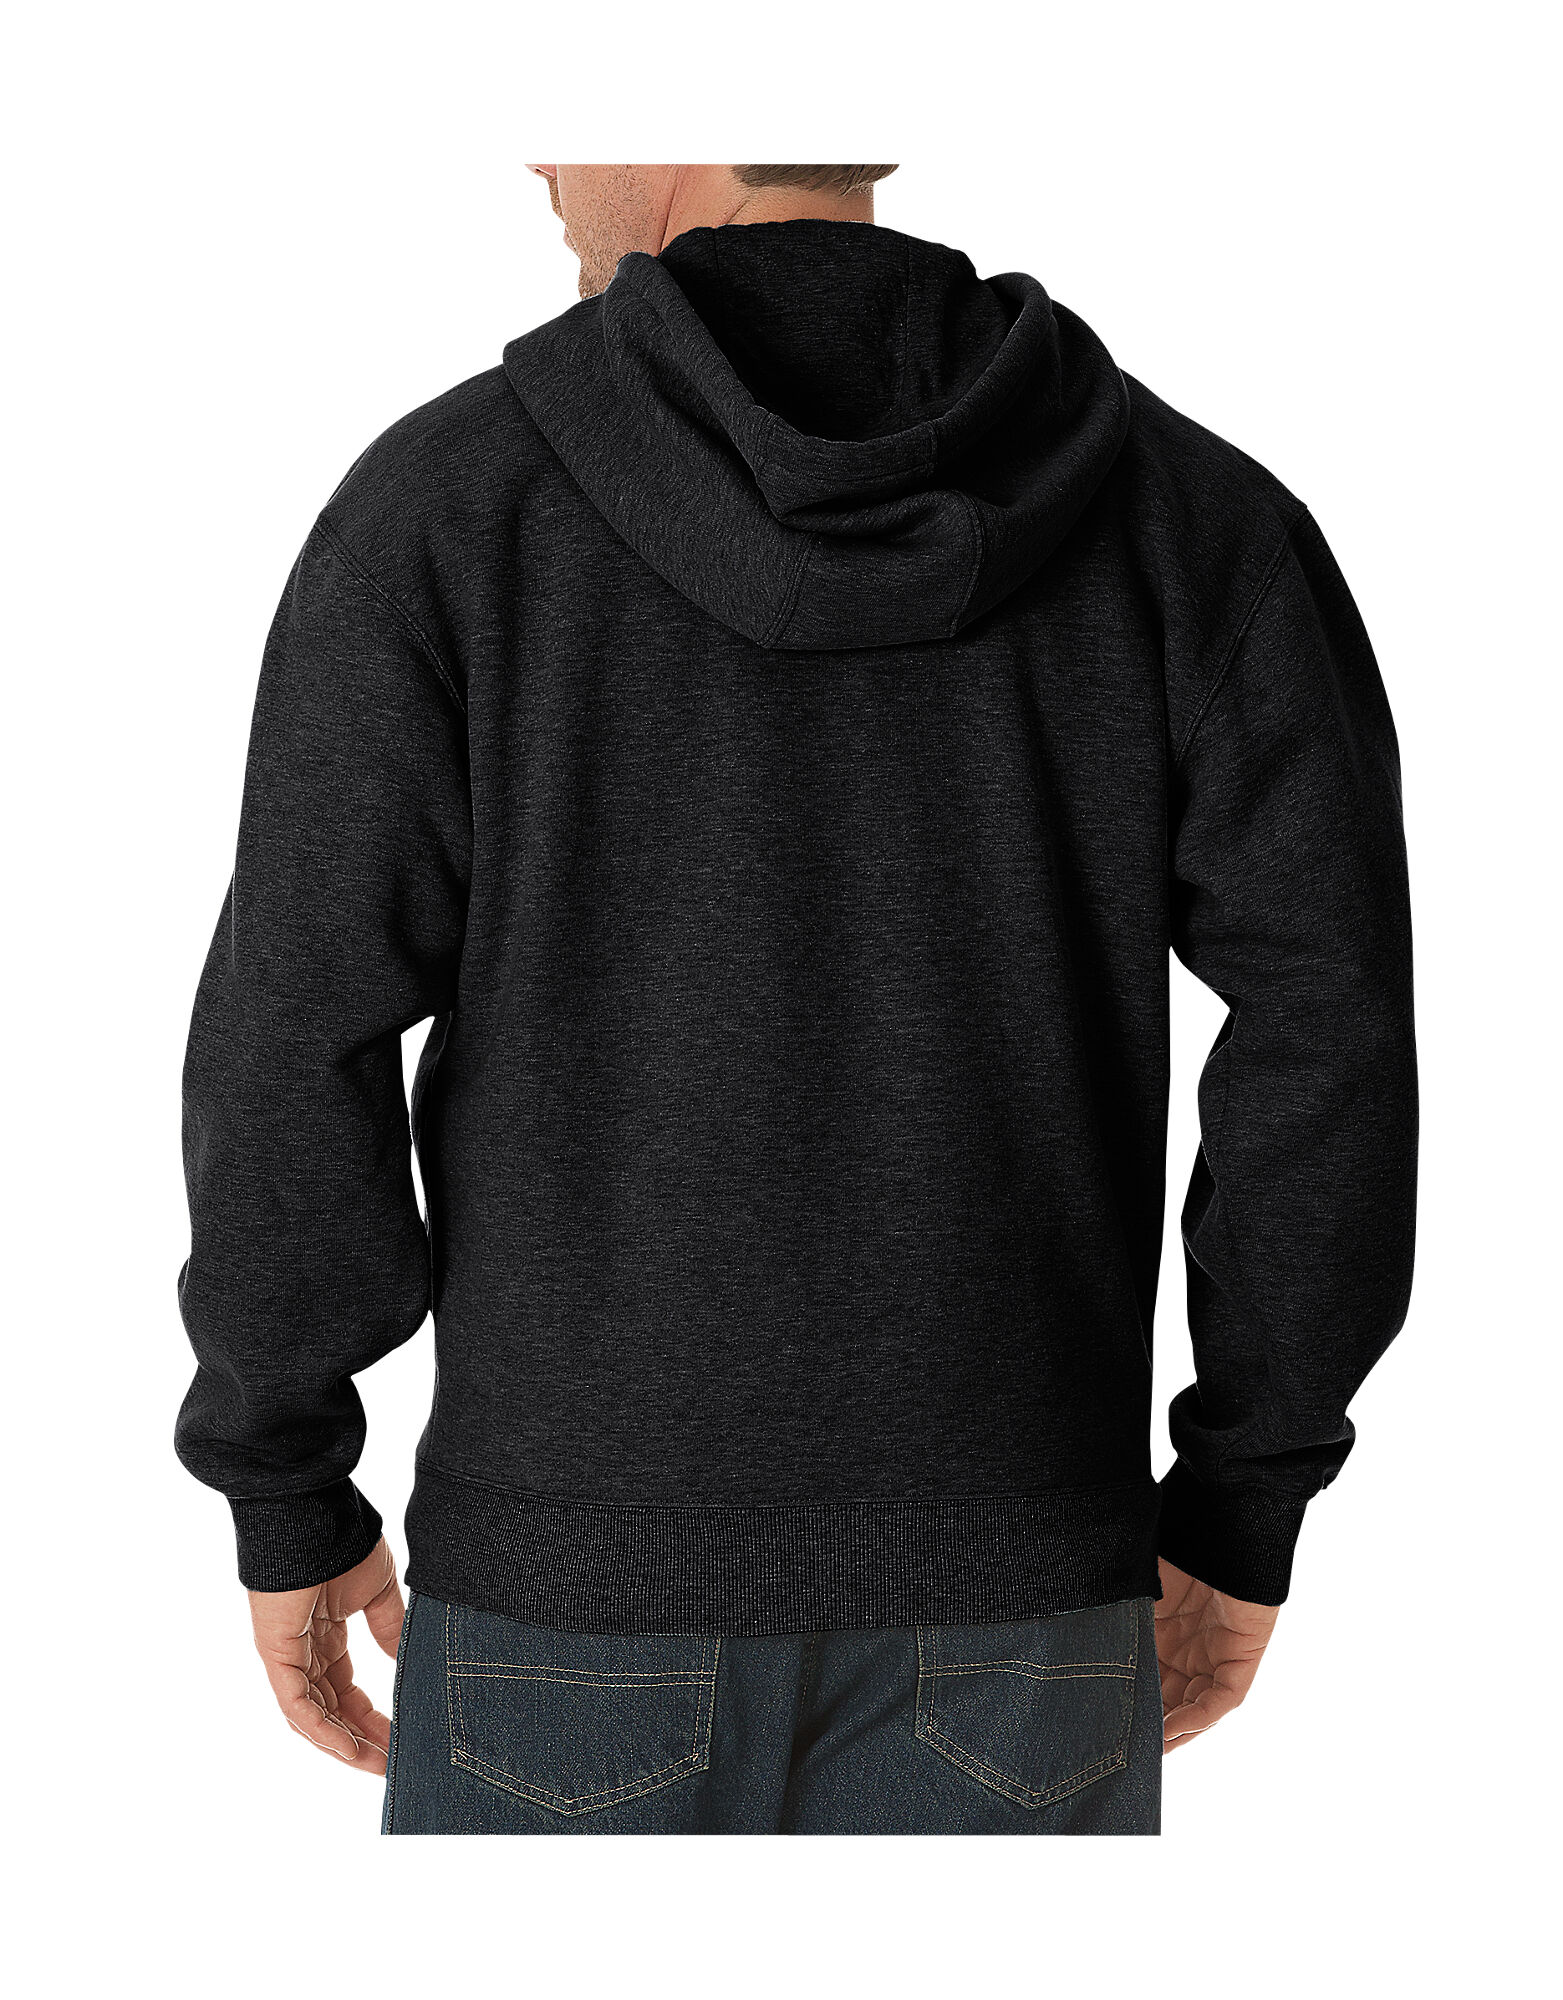 No Hood Zip Up Sweatshirts Coolmine Community School - roblox sweatshirts hoodies cafepress